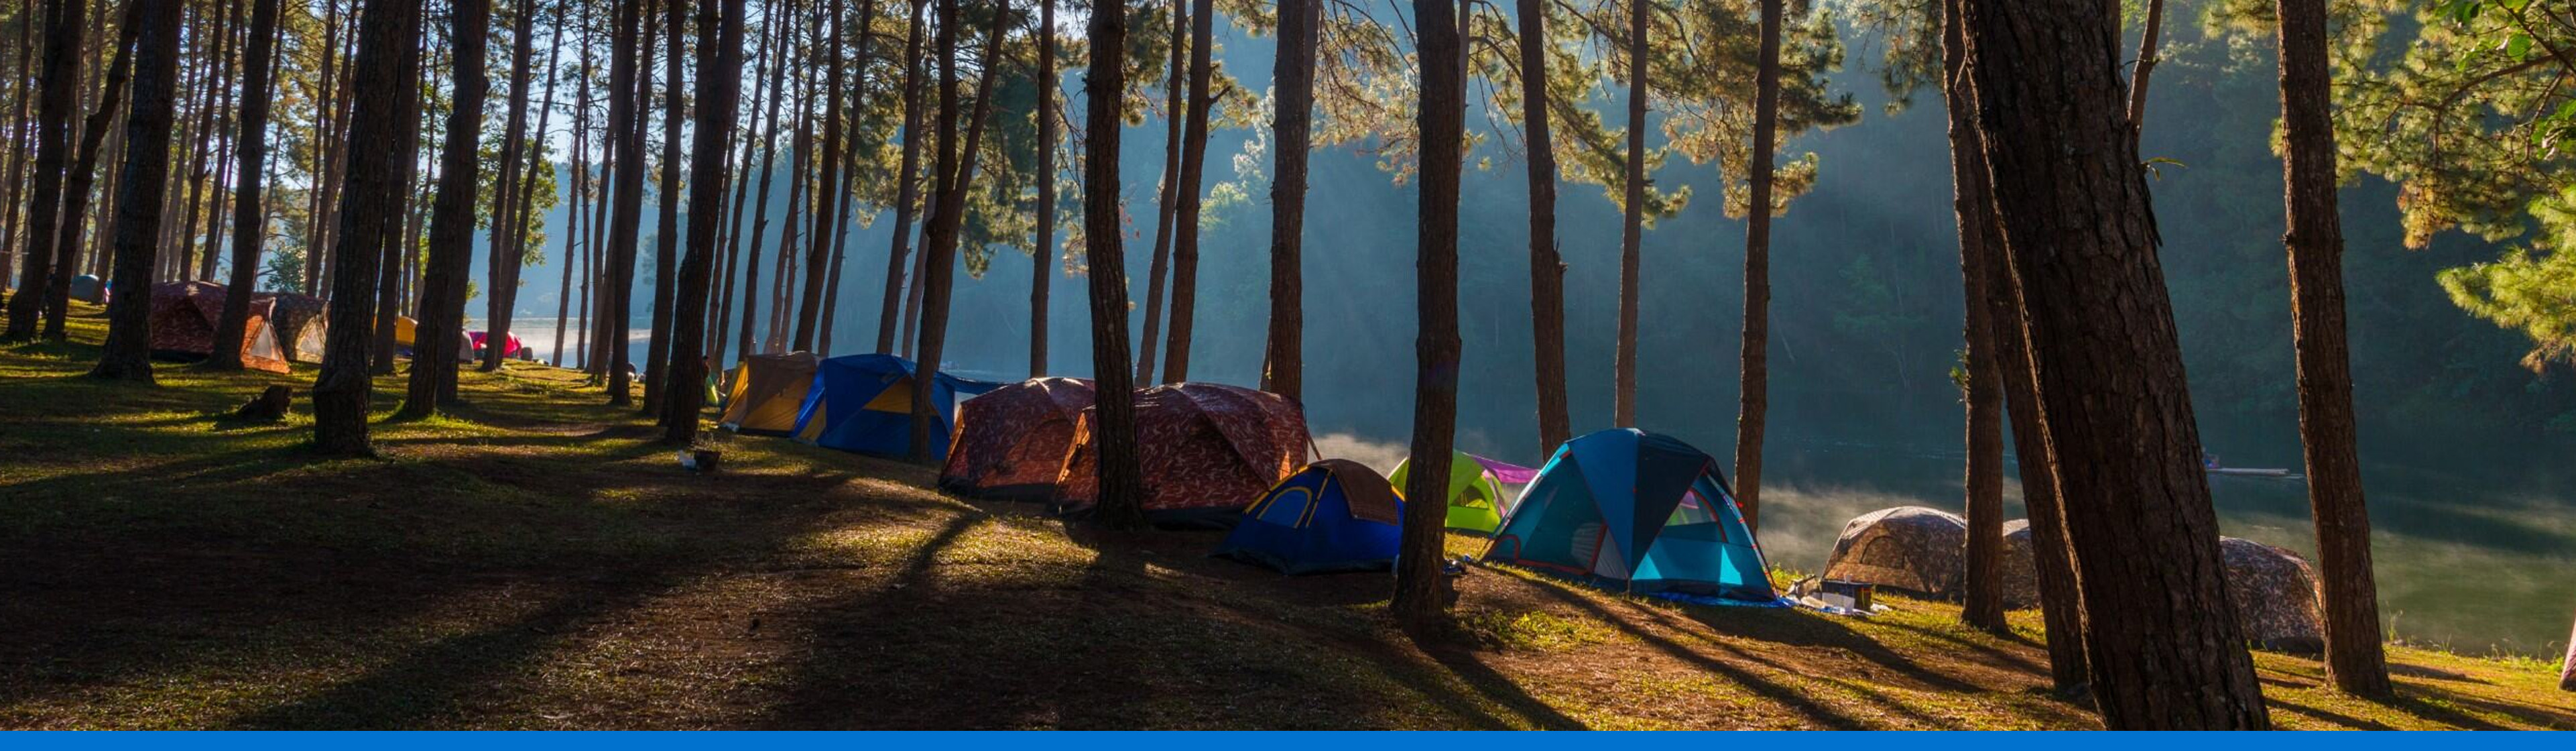 Bosque con carpas de camping